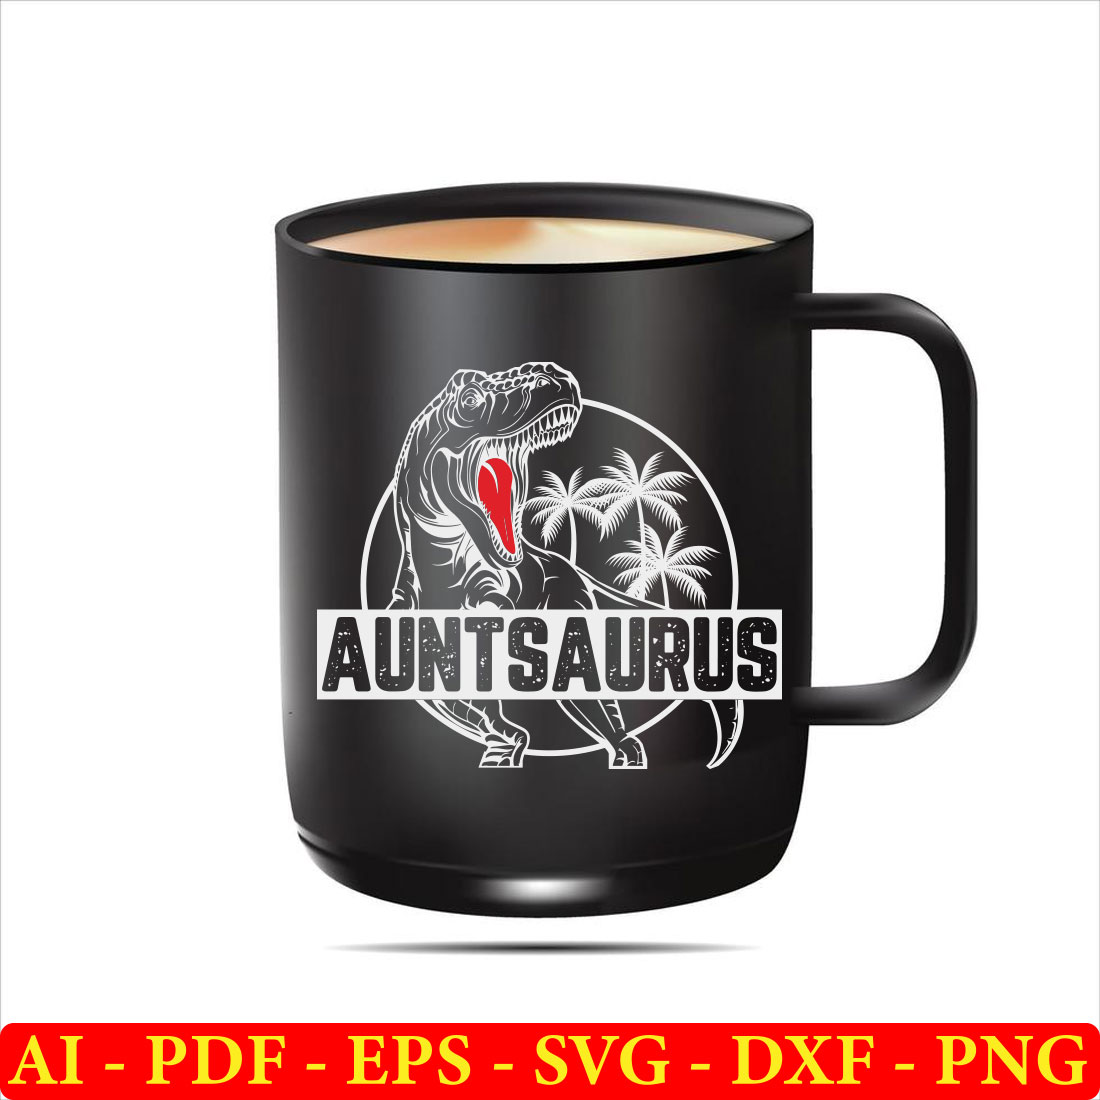 Black mug with an image of a dinosaur on it.